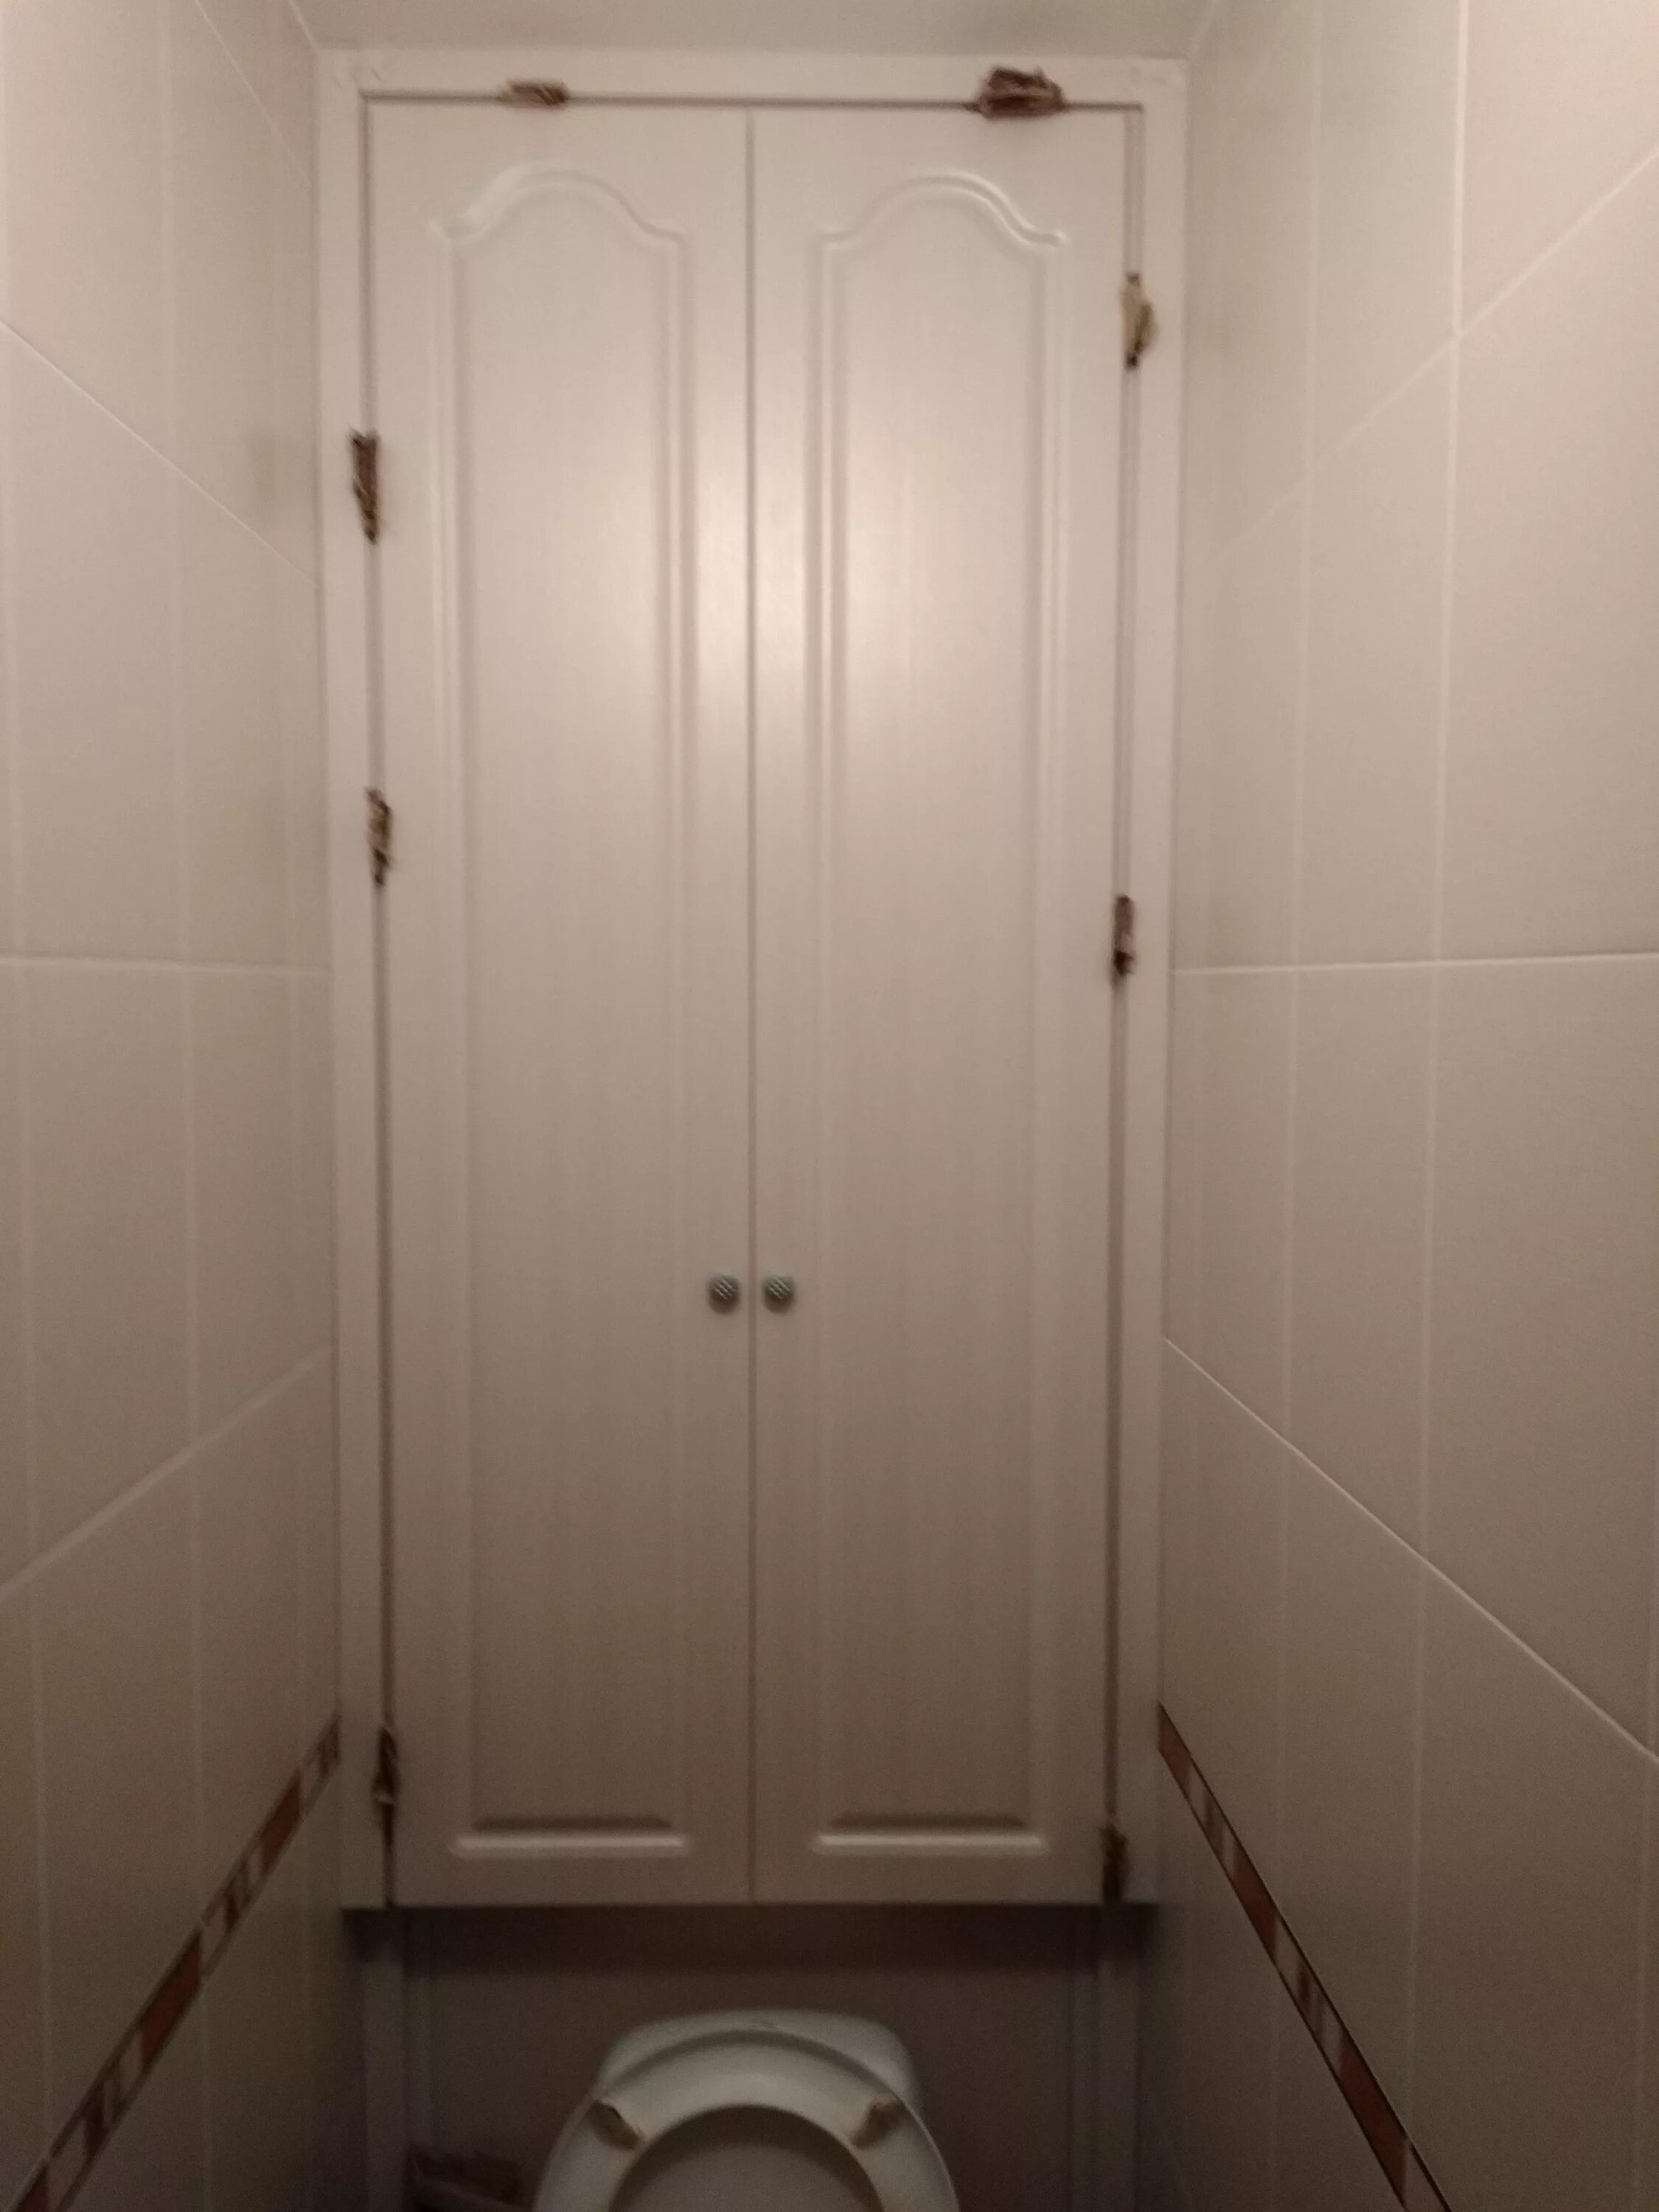 Дверца в туалете купить. Сантехнические двери 50x80. Шкаф в туалет. Сантехнический шкаф в туалет. Дверцы для сантехнического шкафа.